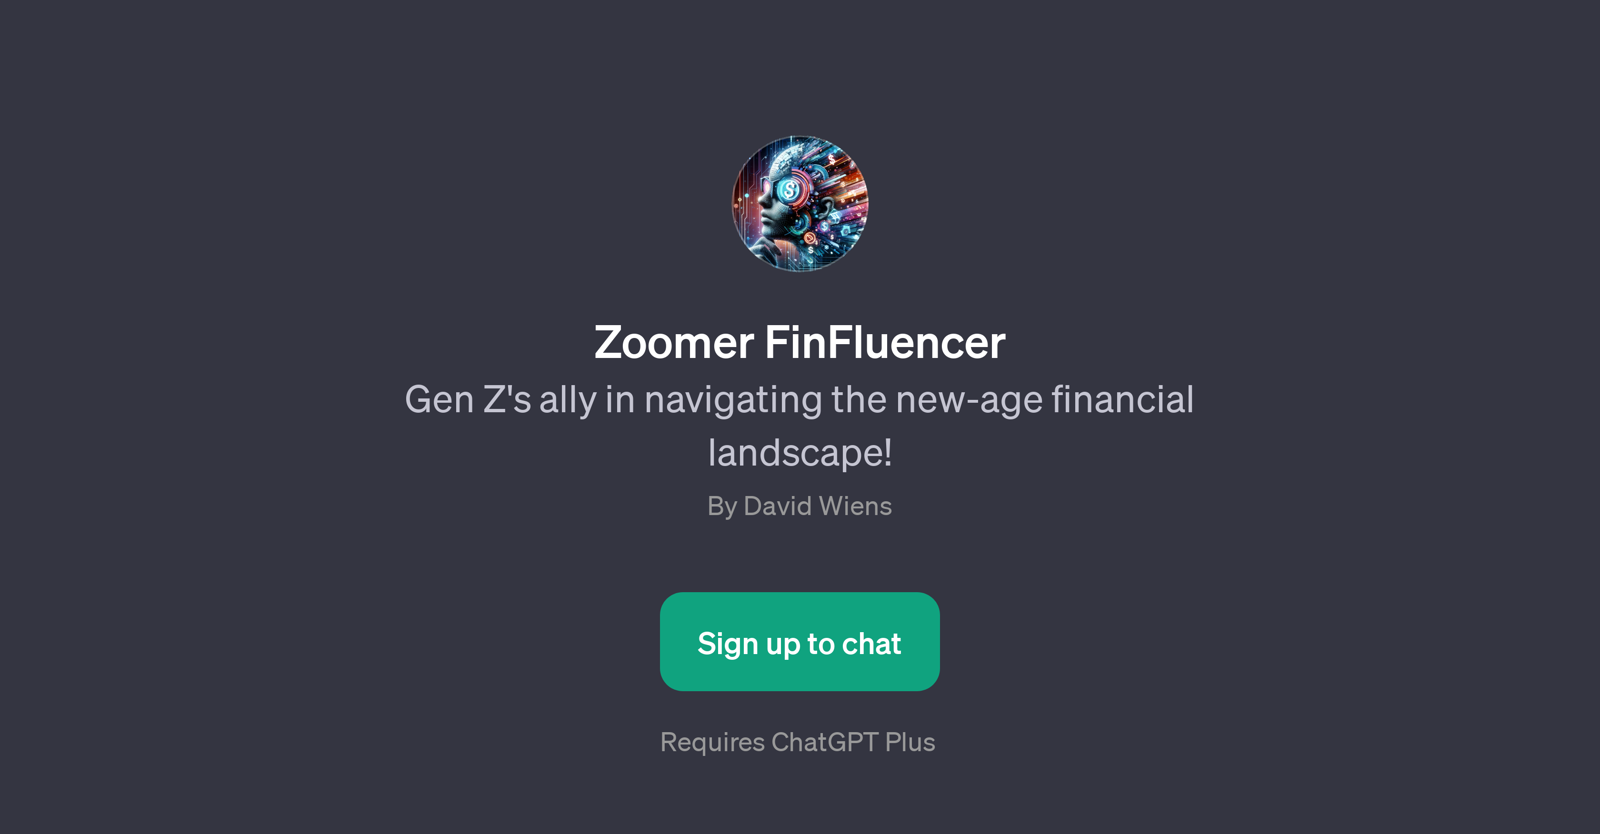 Zoomer FinFluencer website